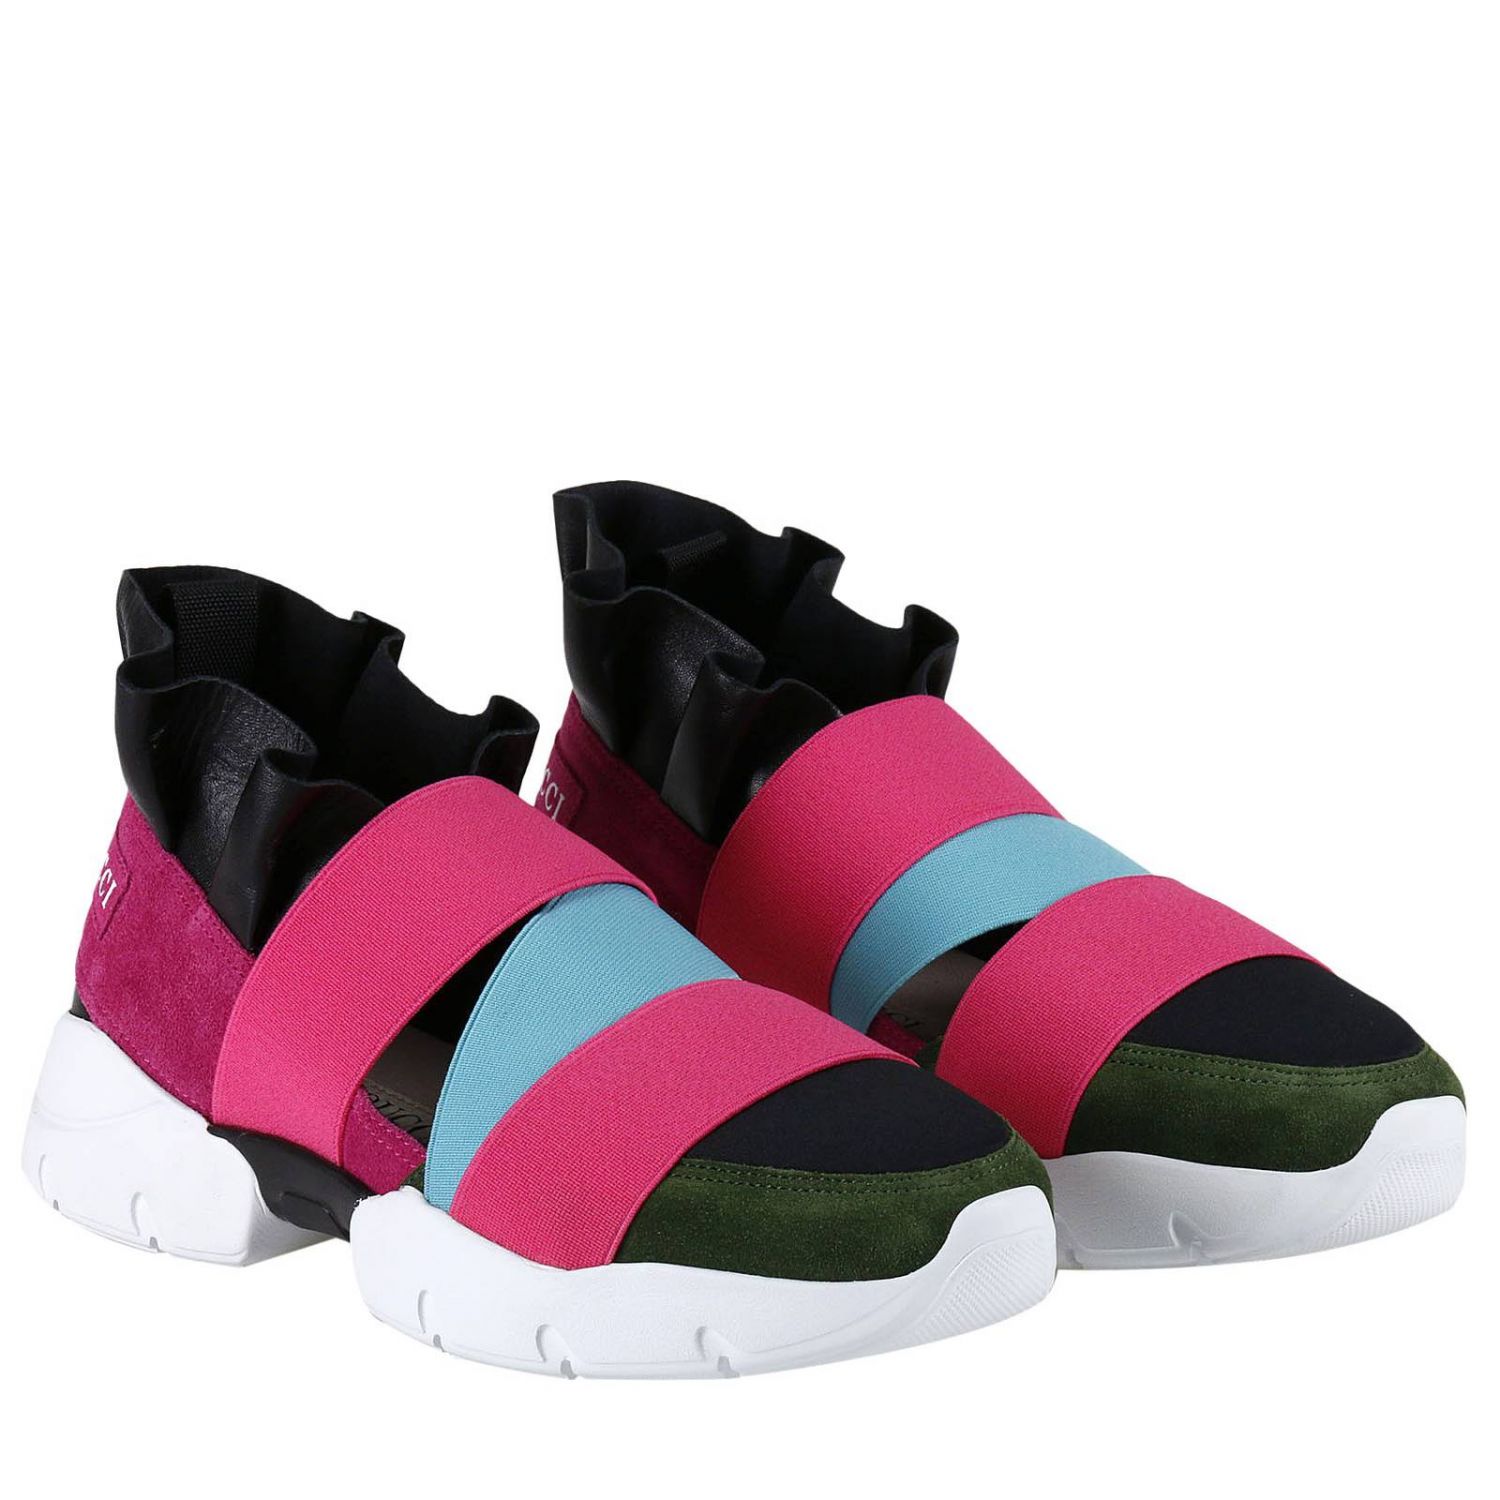 Emilio Pucci Outlet: Shoes women | Sneakers Emilio Pucci Women Olive ...